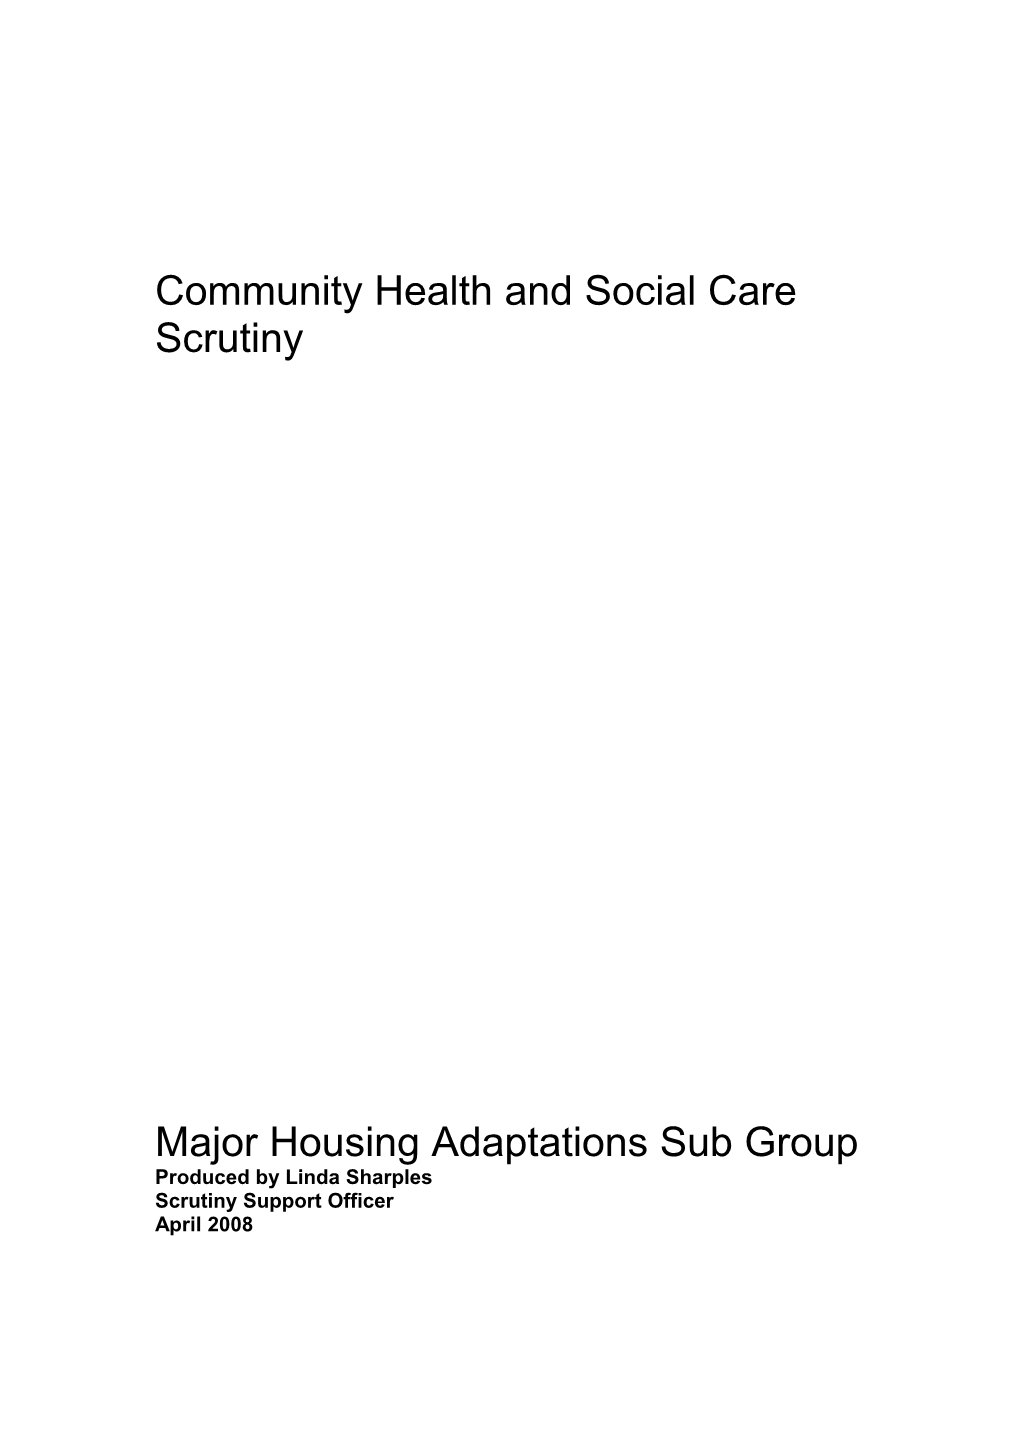 Community Health and Social Care Scrutiny